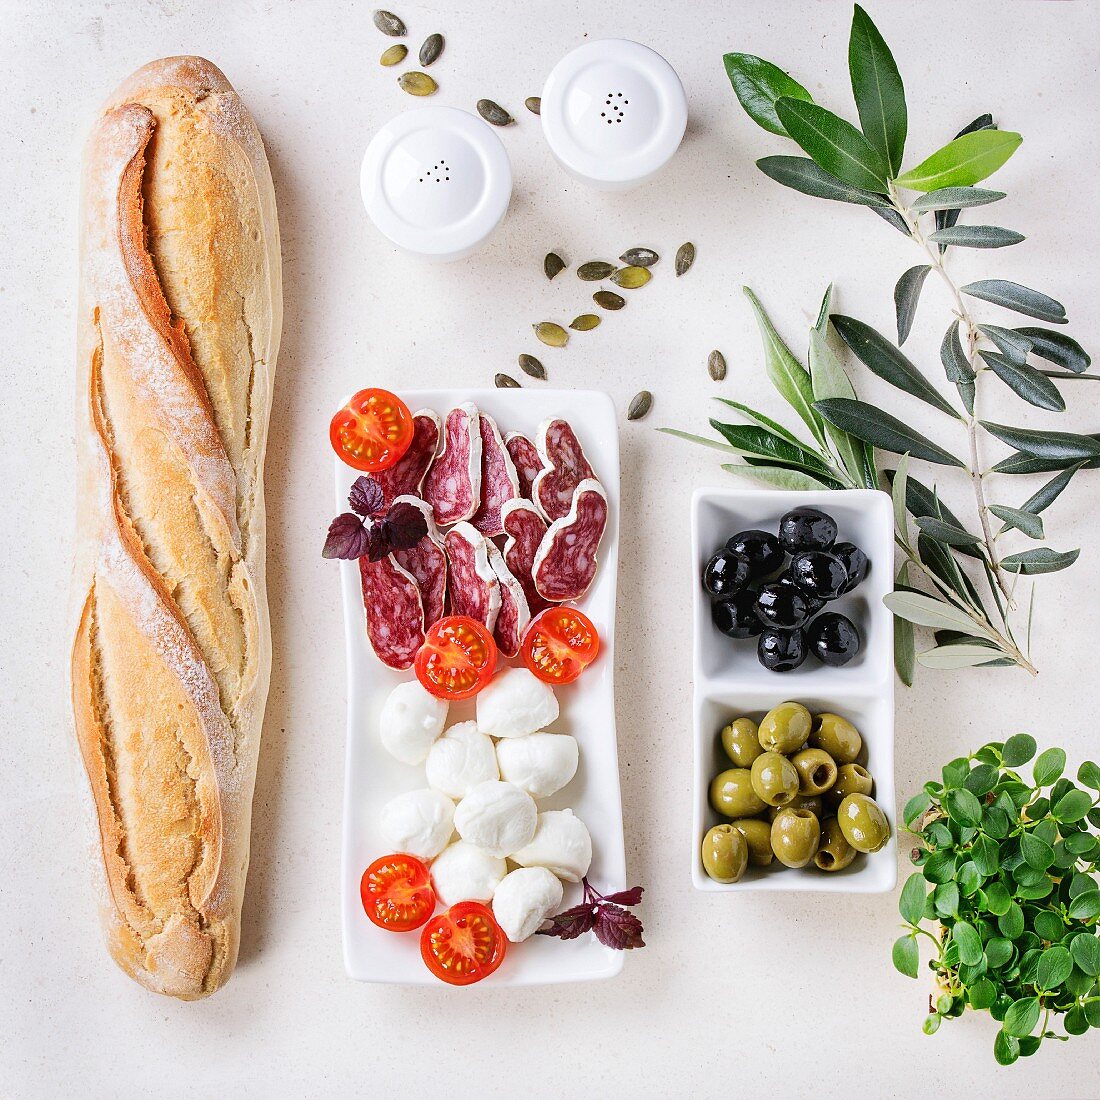 Antipasti: Baguette, Salami, Mozzarella, Tomaten und Oliven (Aufsicht)